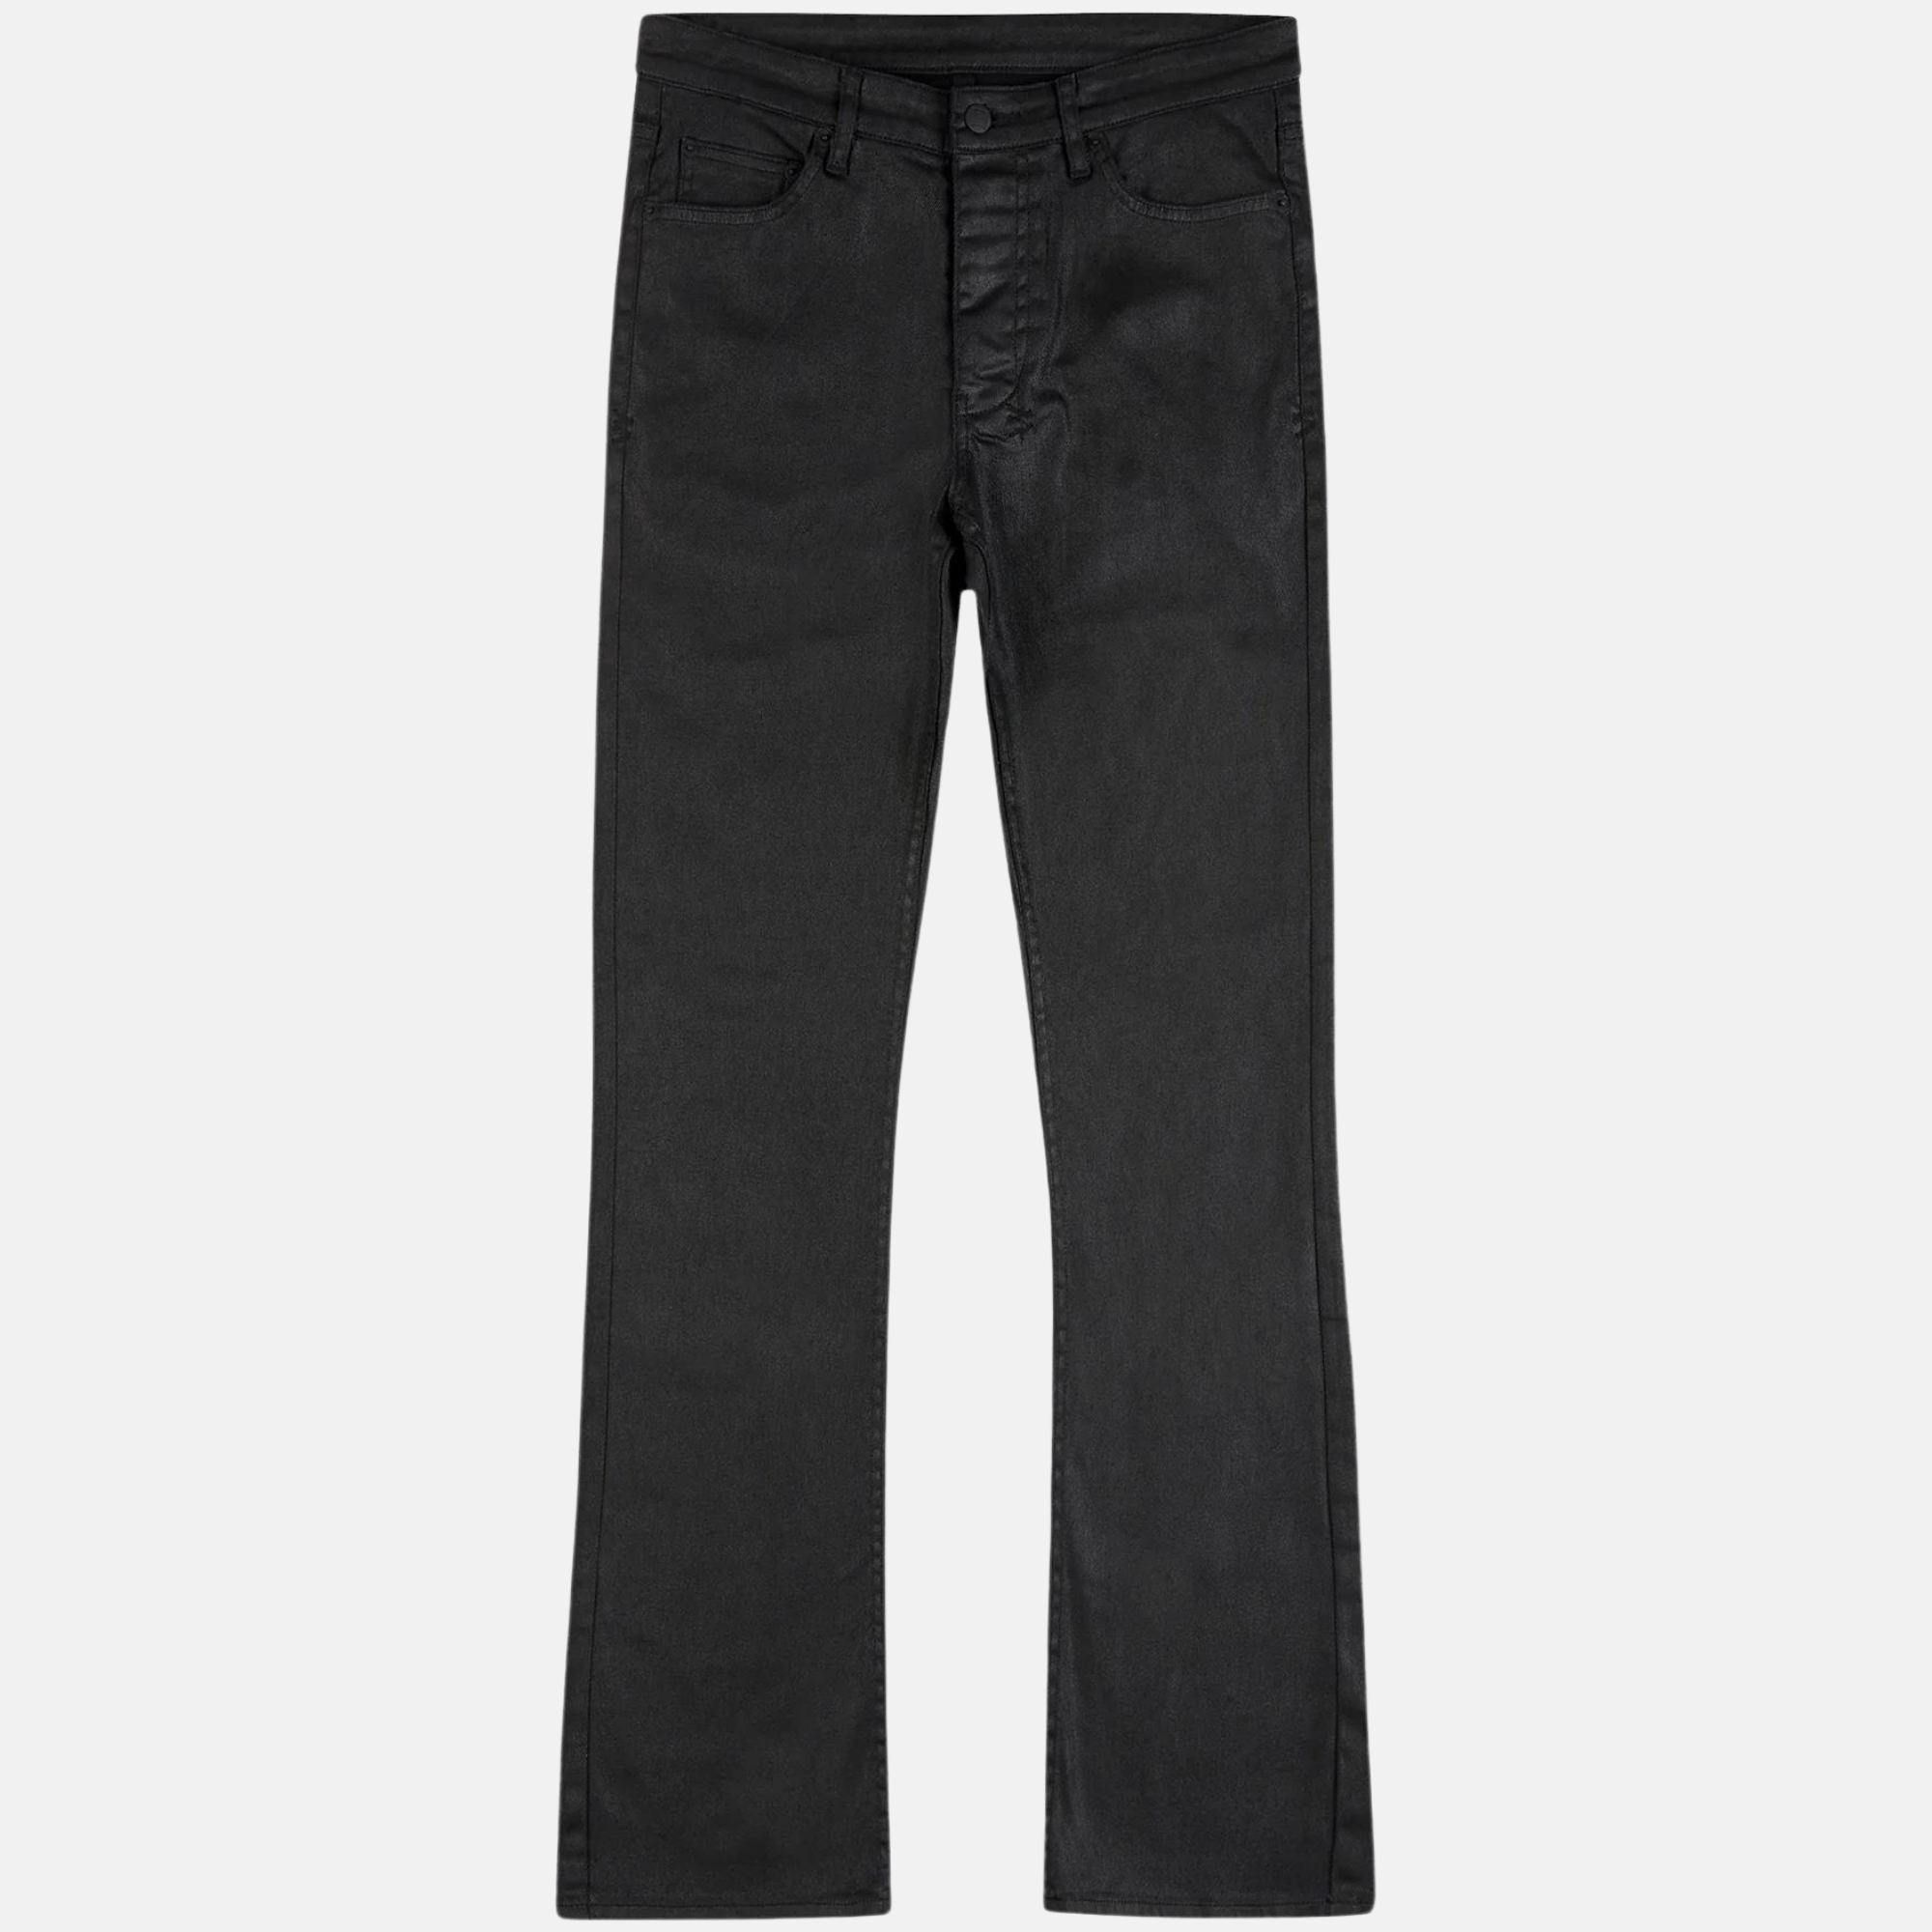 Ksubi Bronko Black Wax Jeans